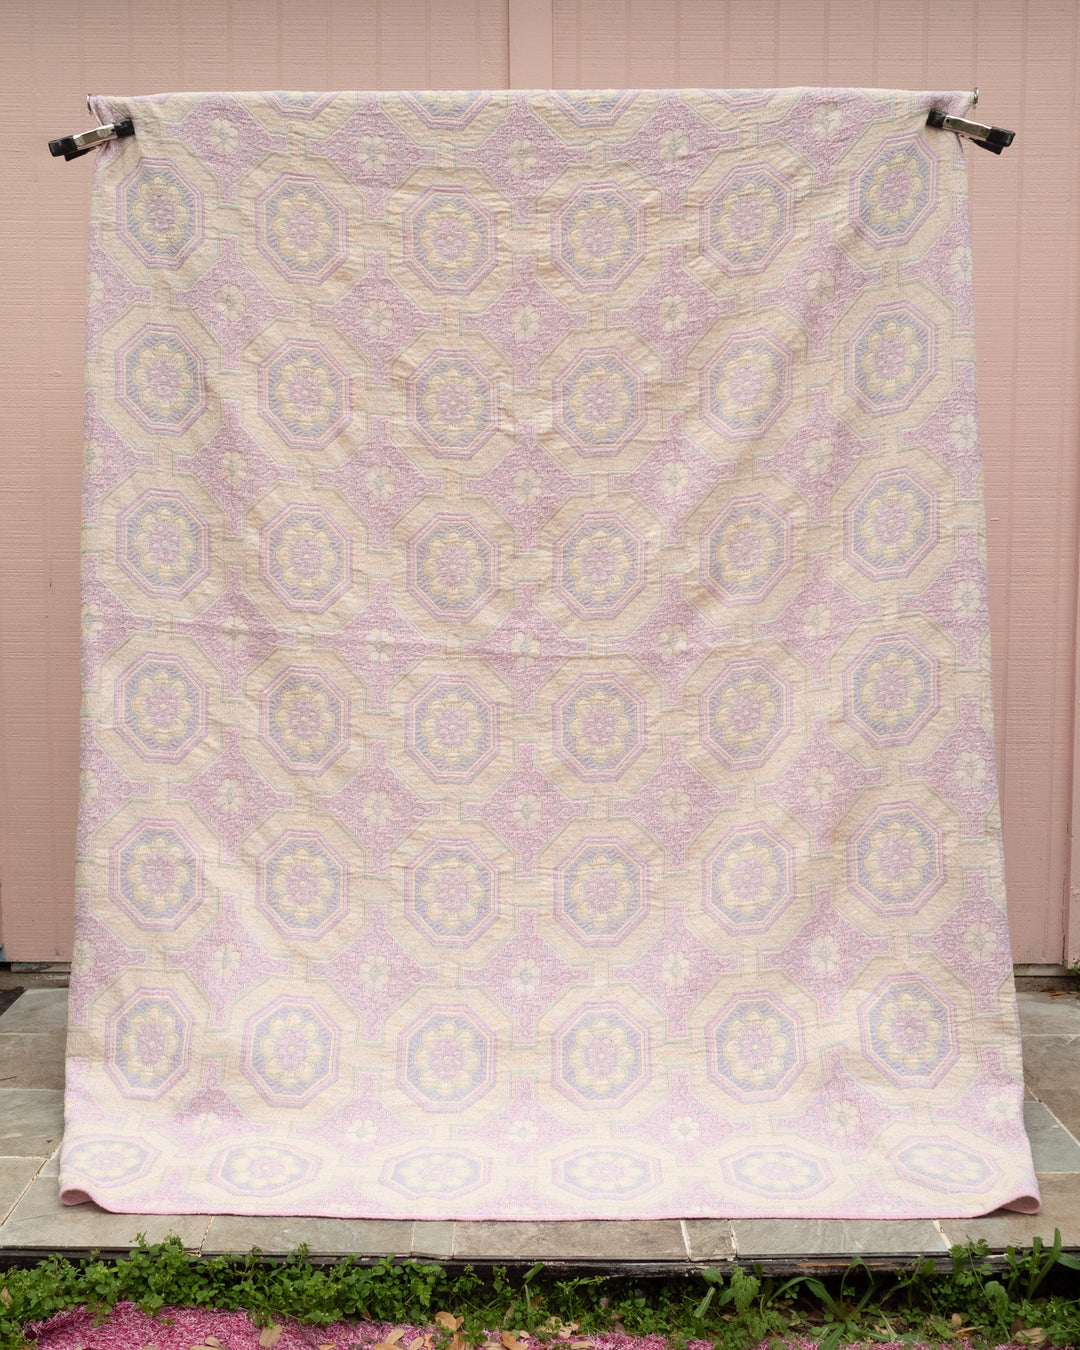 Woven Blanket Overalls